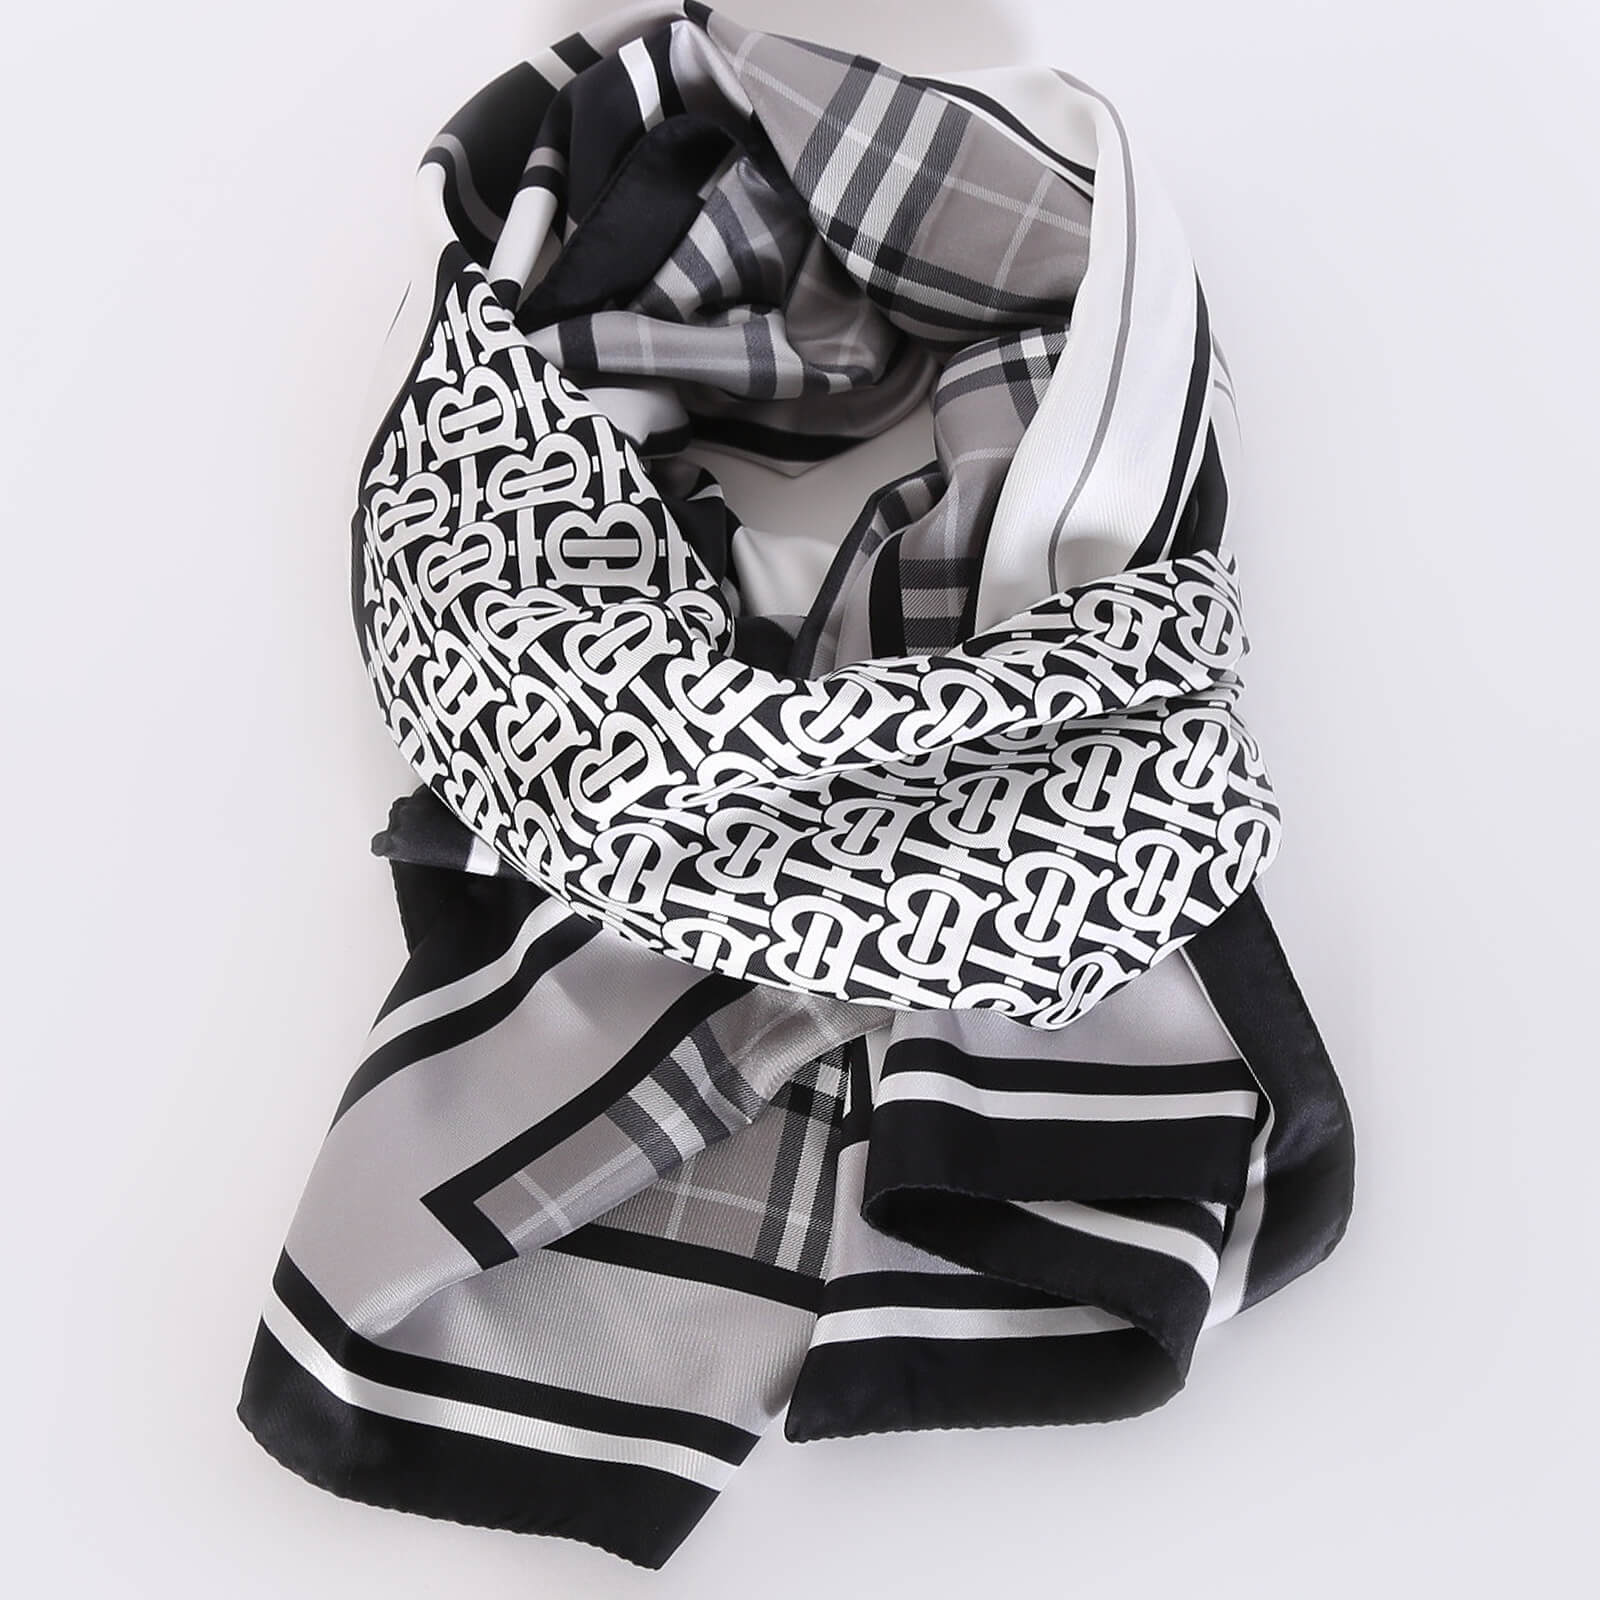 Burberry - Monochrome Multi-Print Silk Scarf Black/White